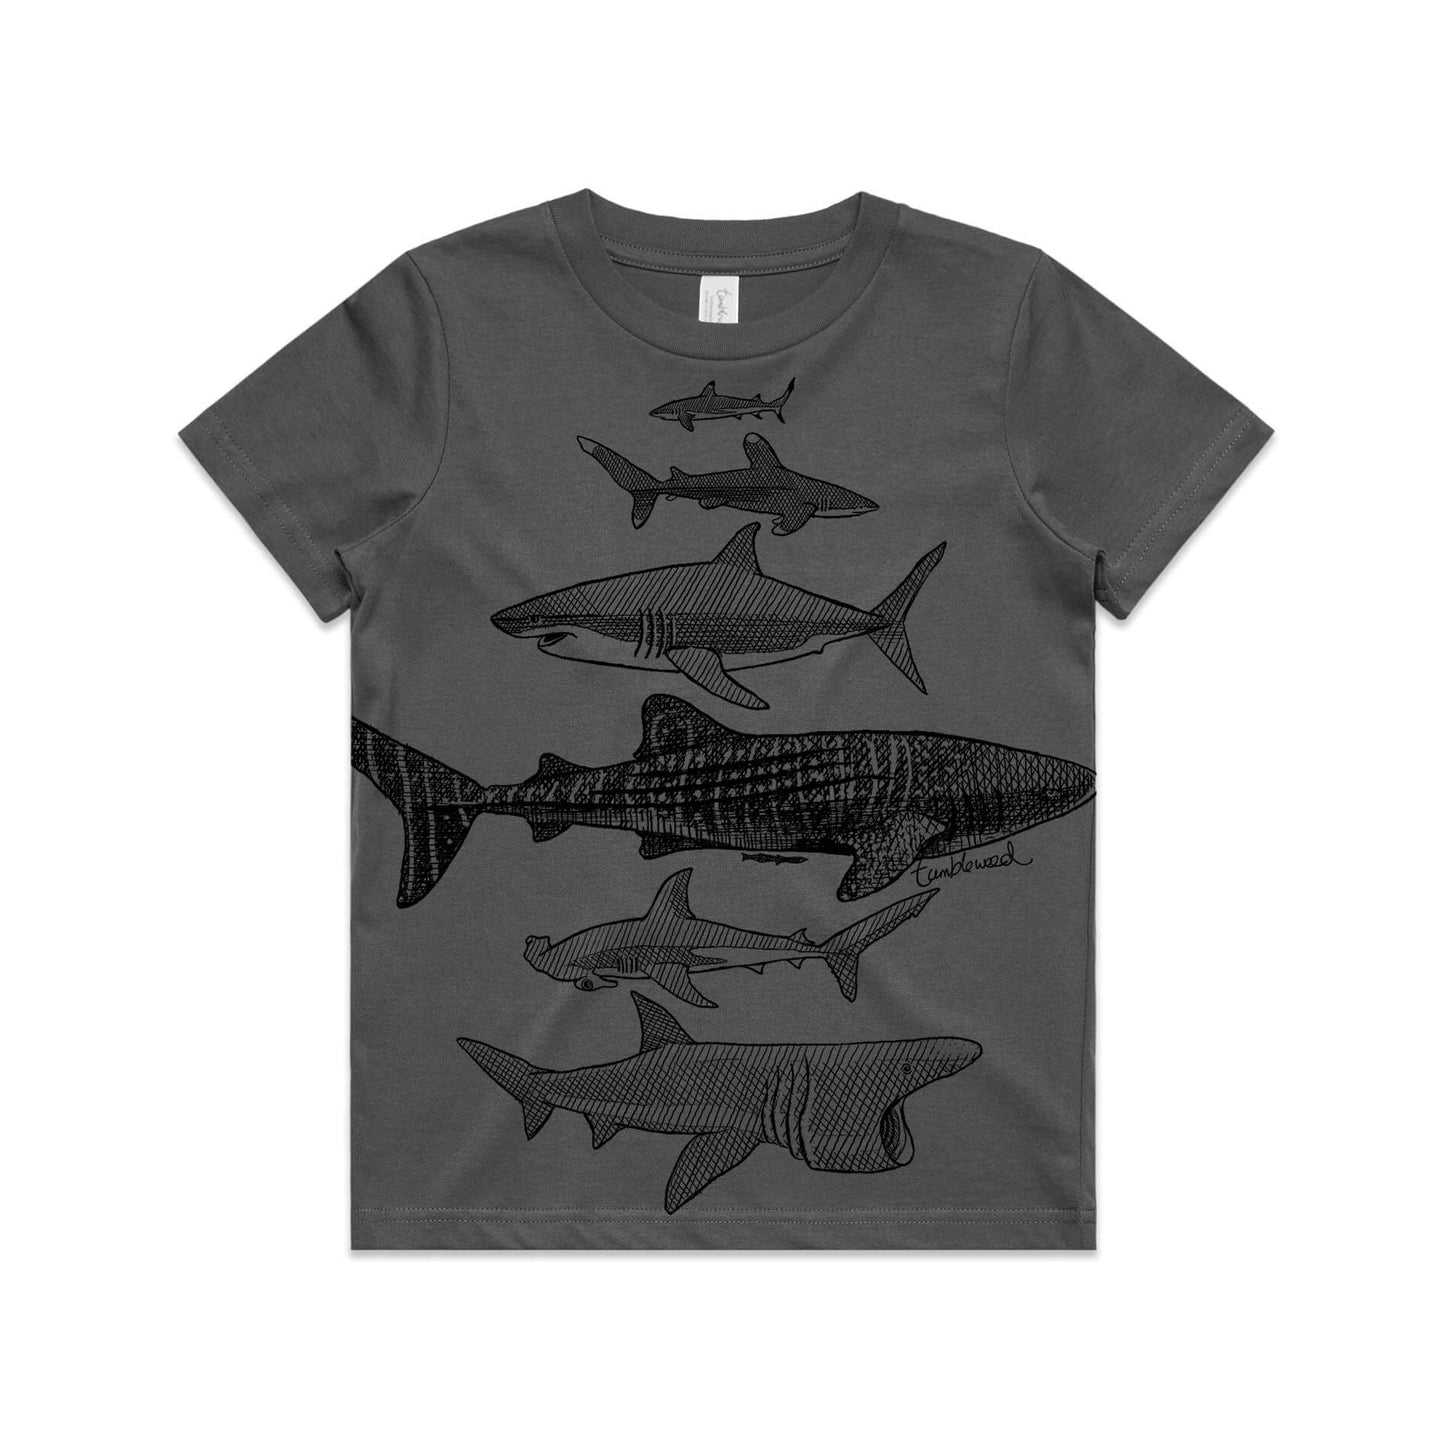 Charcoal, cotton kids' t-shirt with screen printed Kids shark design.